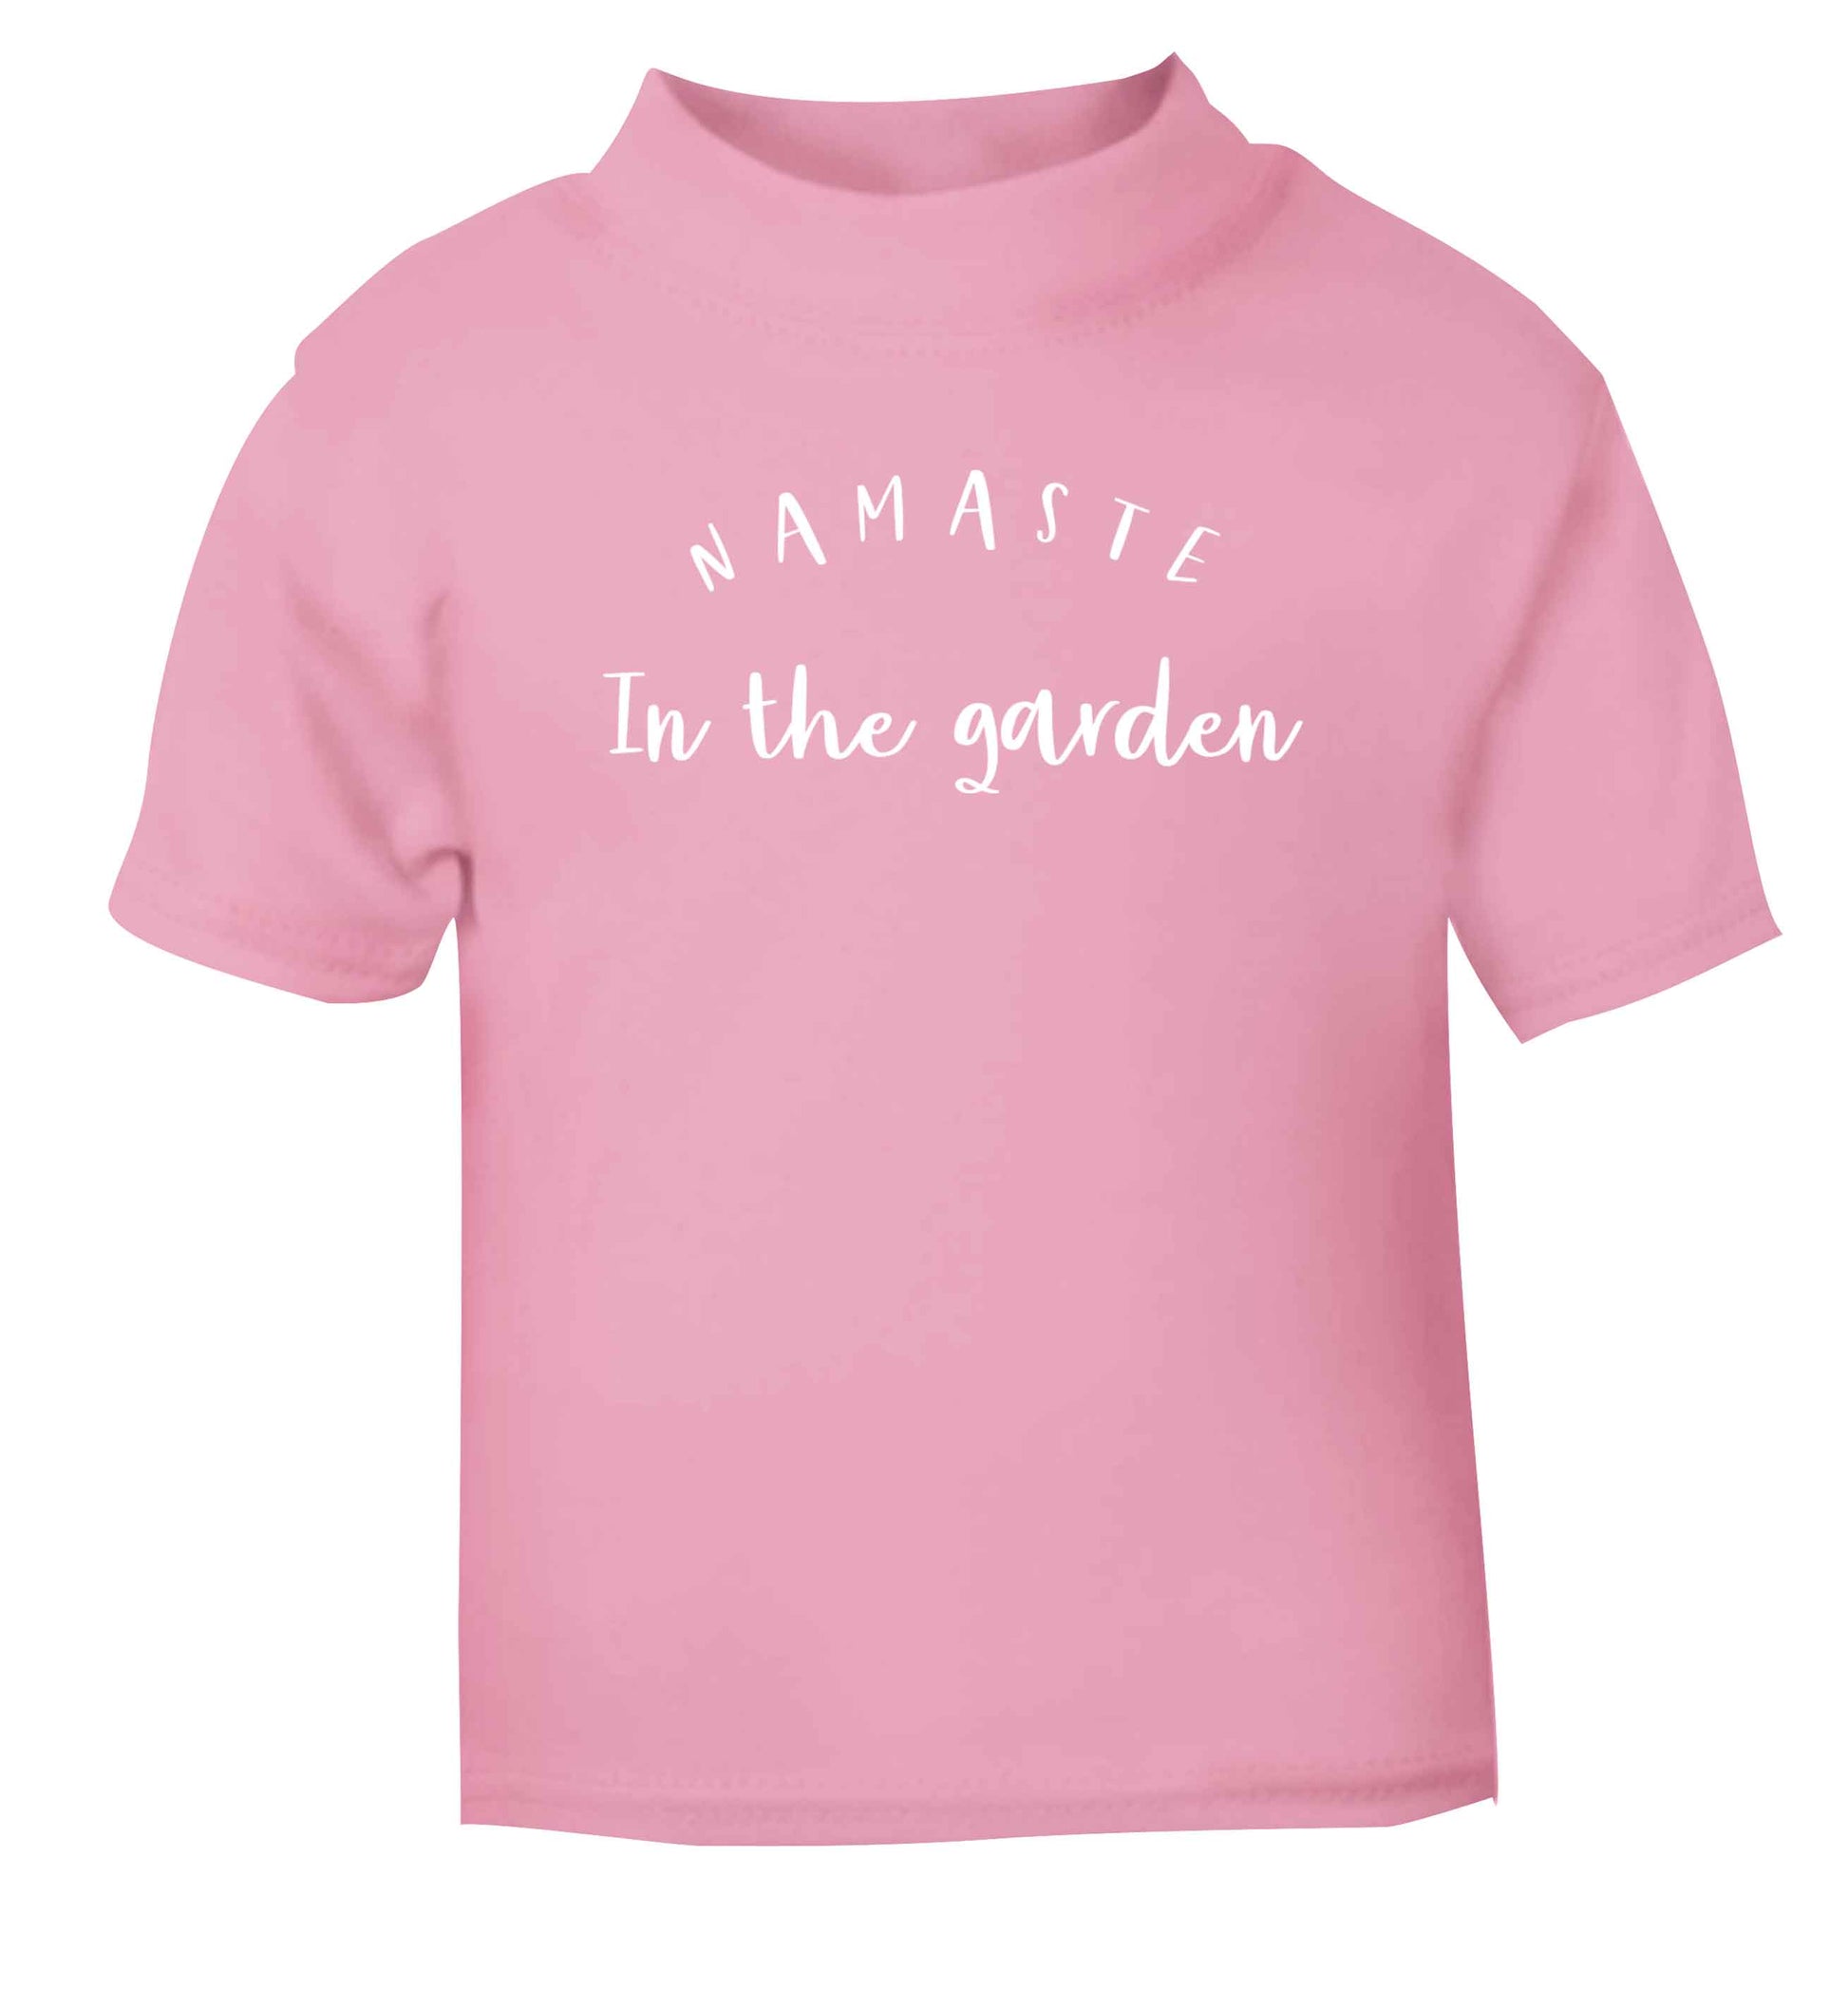 Namaste in the garden light pink Baby Toddler Tshirt 2 Years